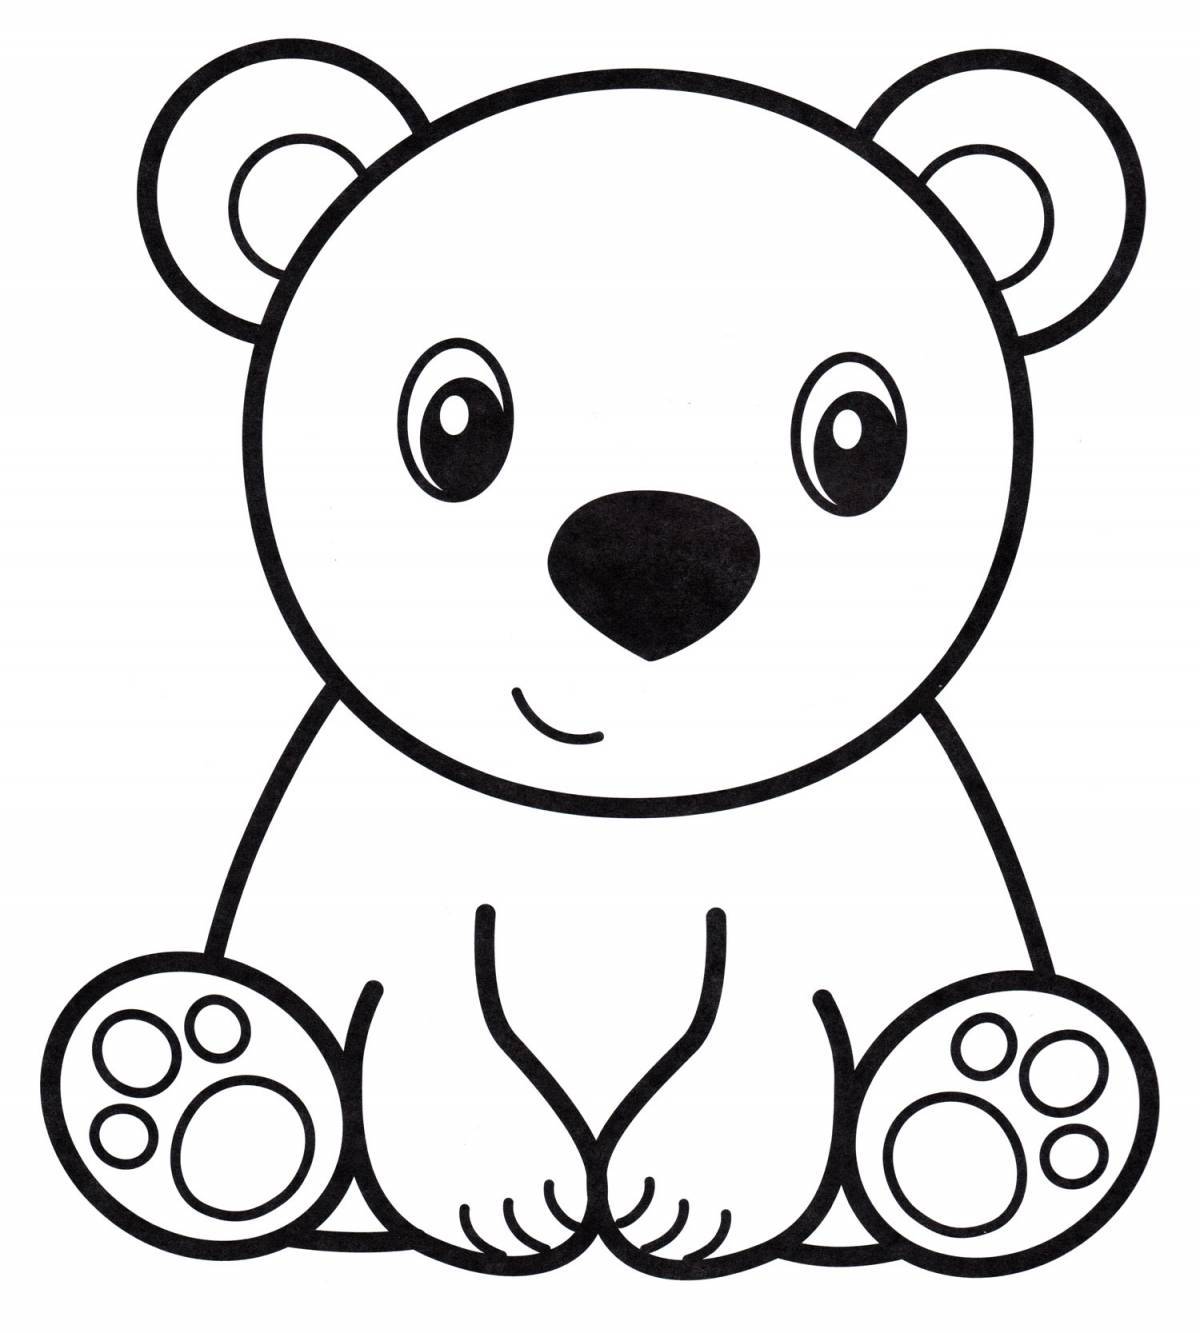 Color-frenzy coloring page bear для детей 3-4 лет